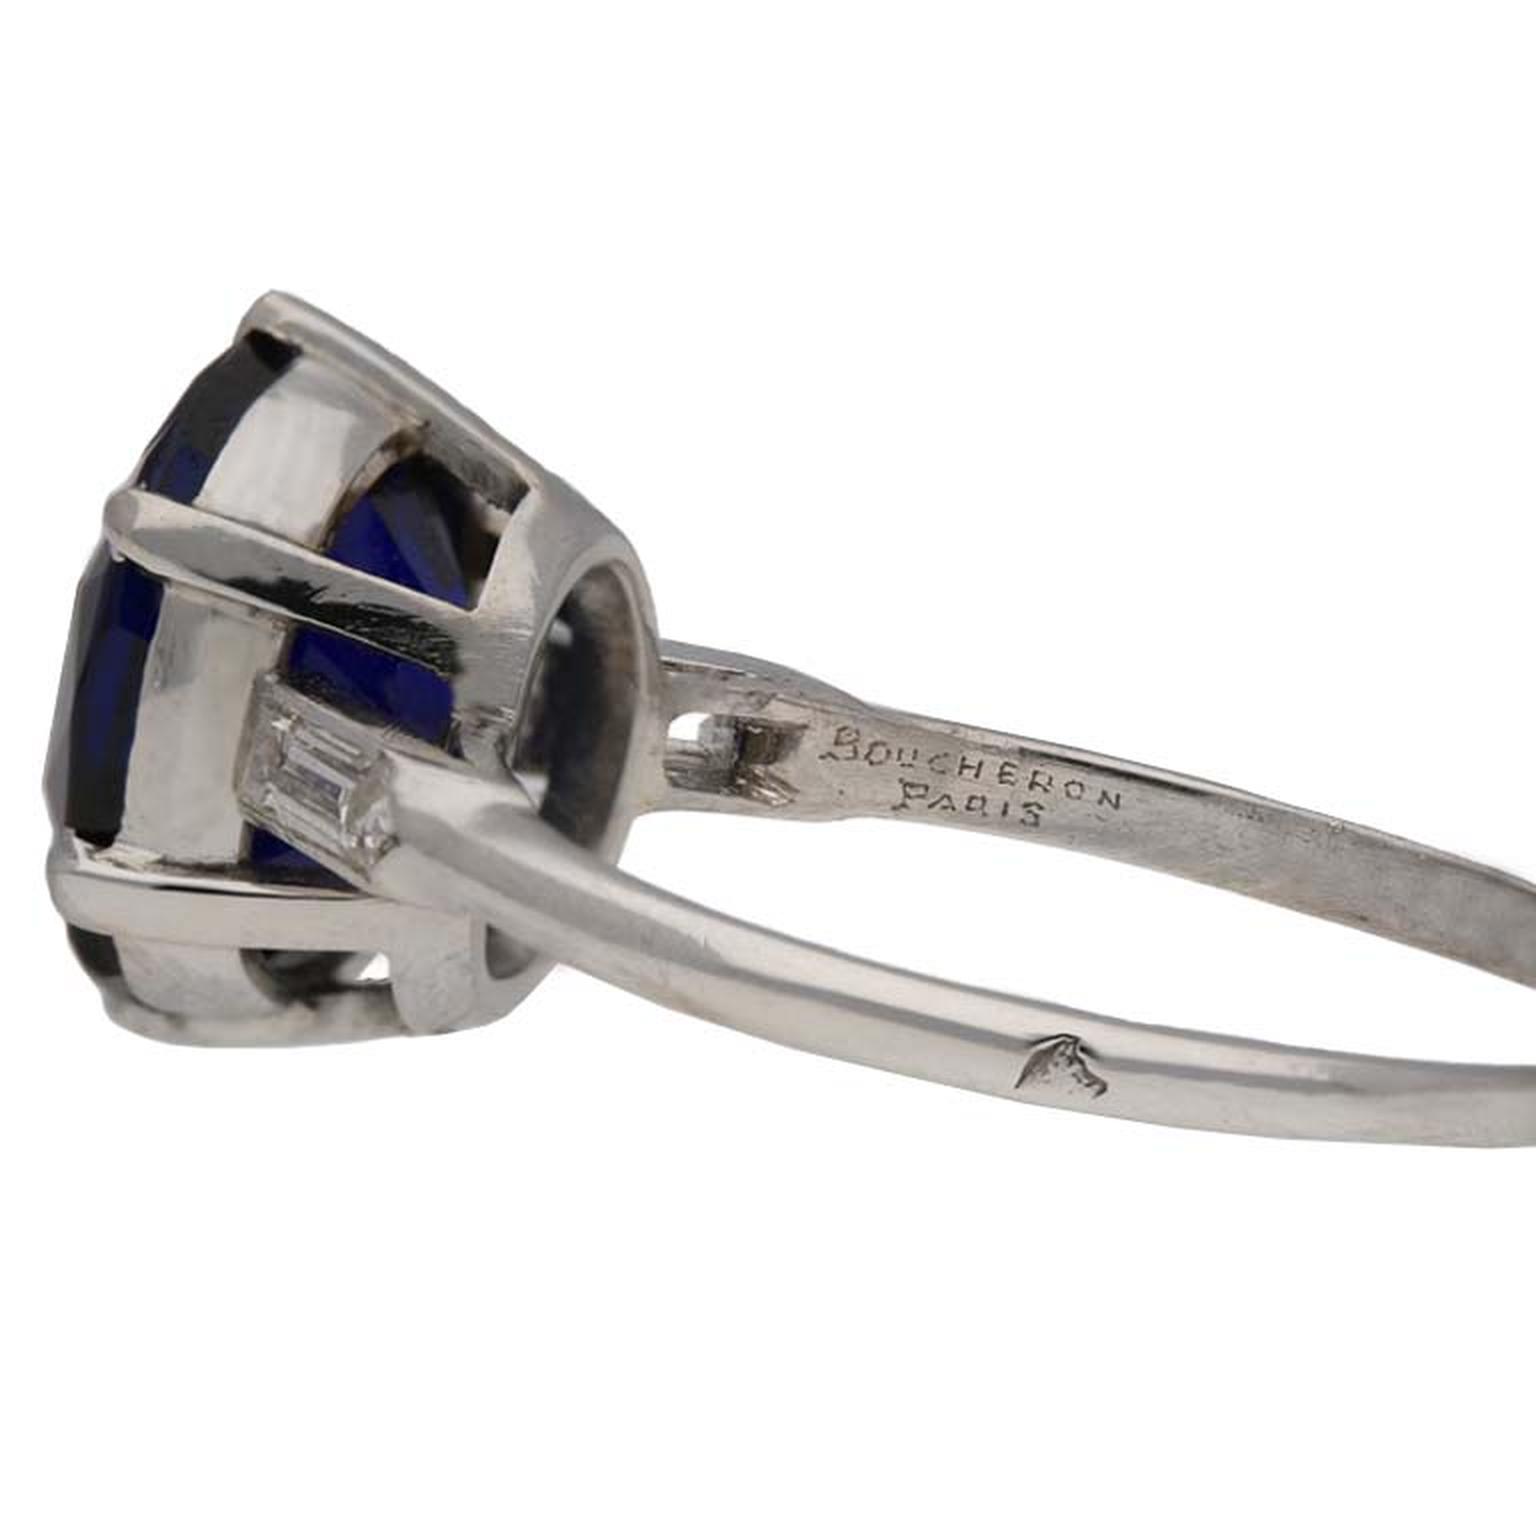 Boucheron sapphire and diamond engagement ring, side view